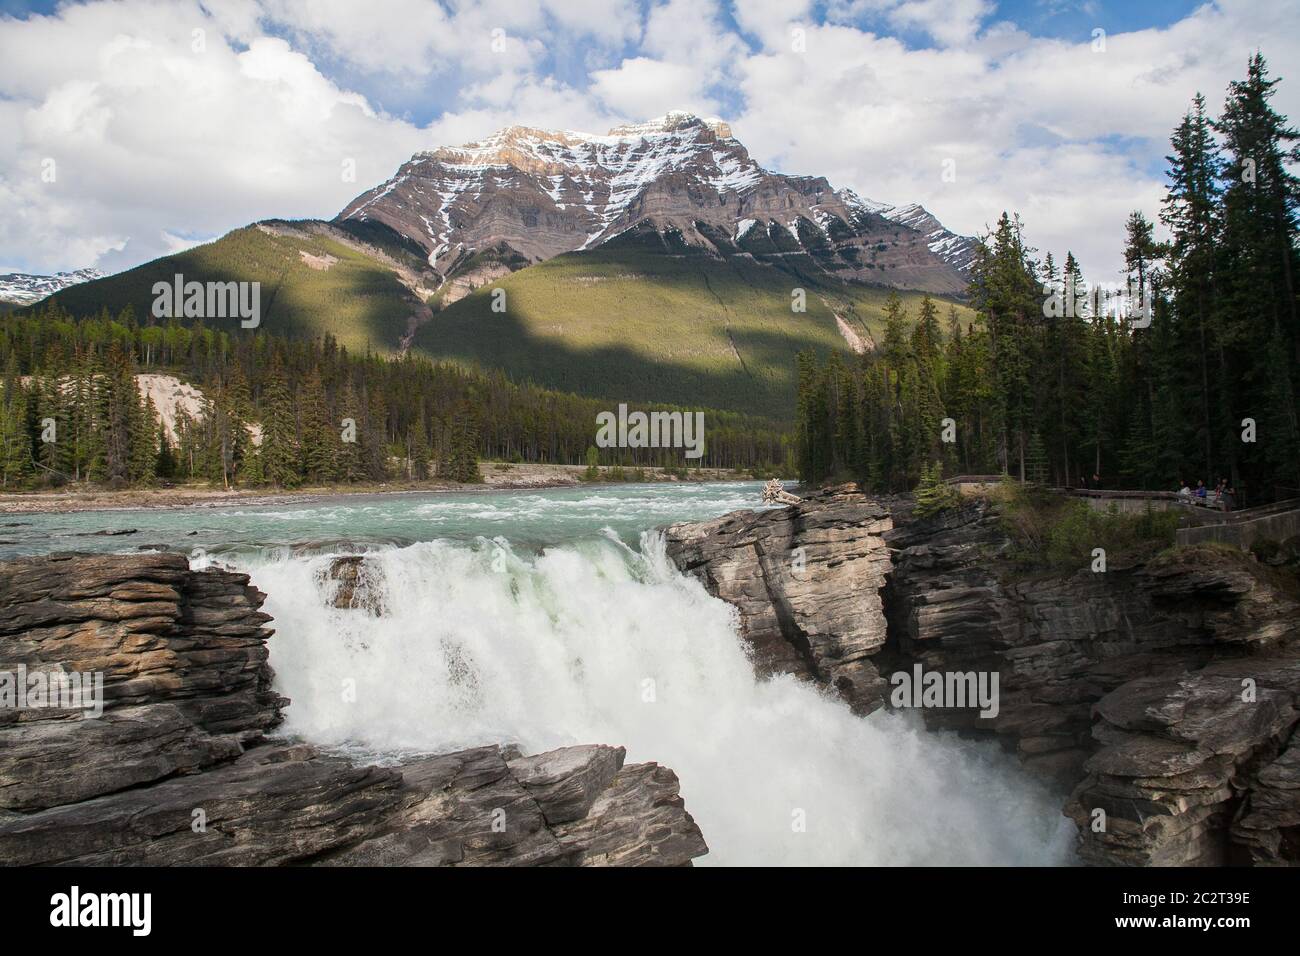 The Athabasca falls in Jasper National Park, Alberta, Canada Stock Photo